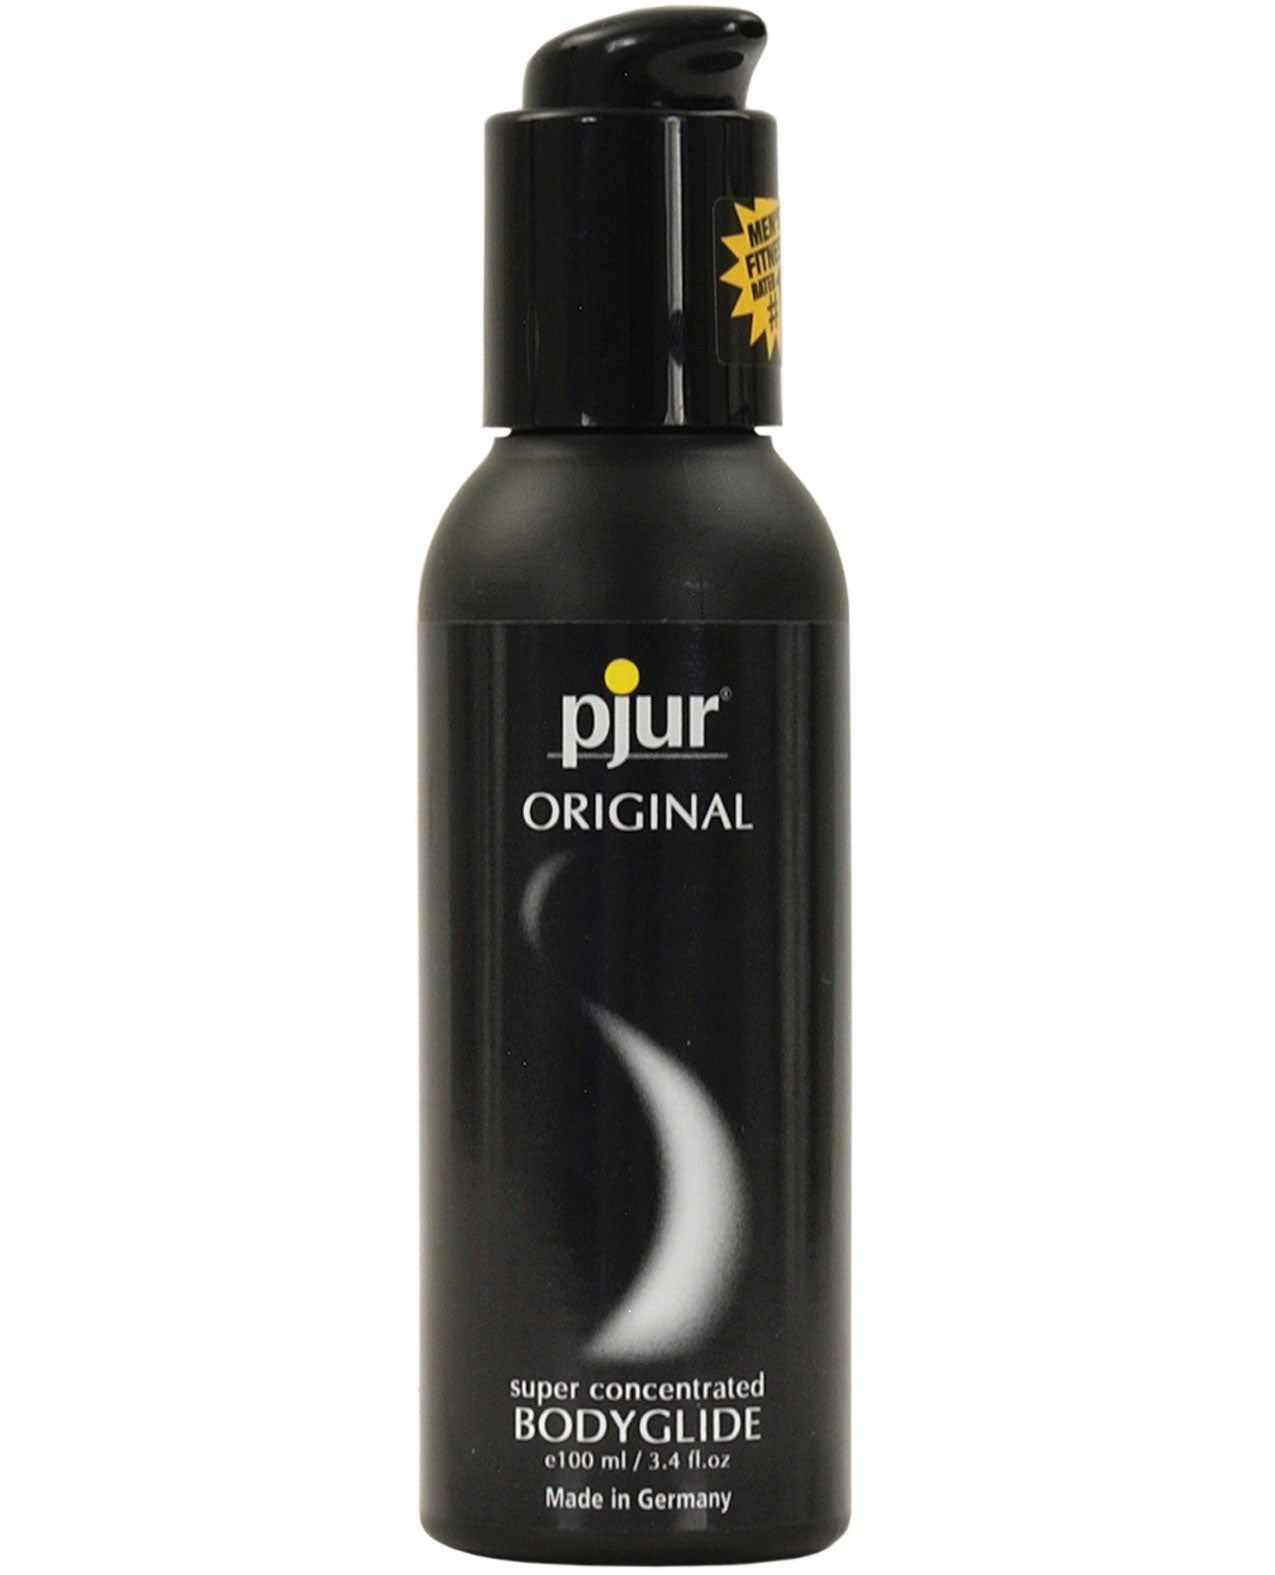 Pjur Original Silicone Personal Lubricants - 100ml Bottle